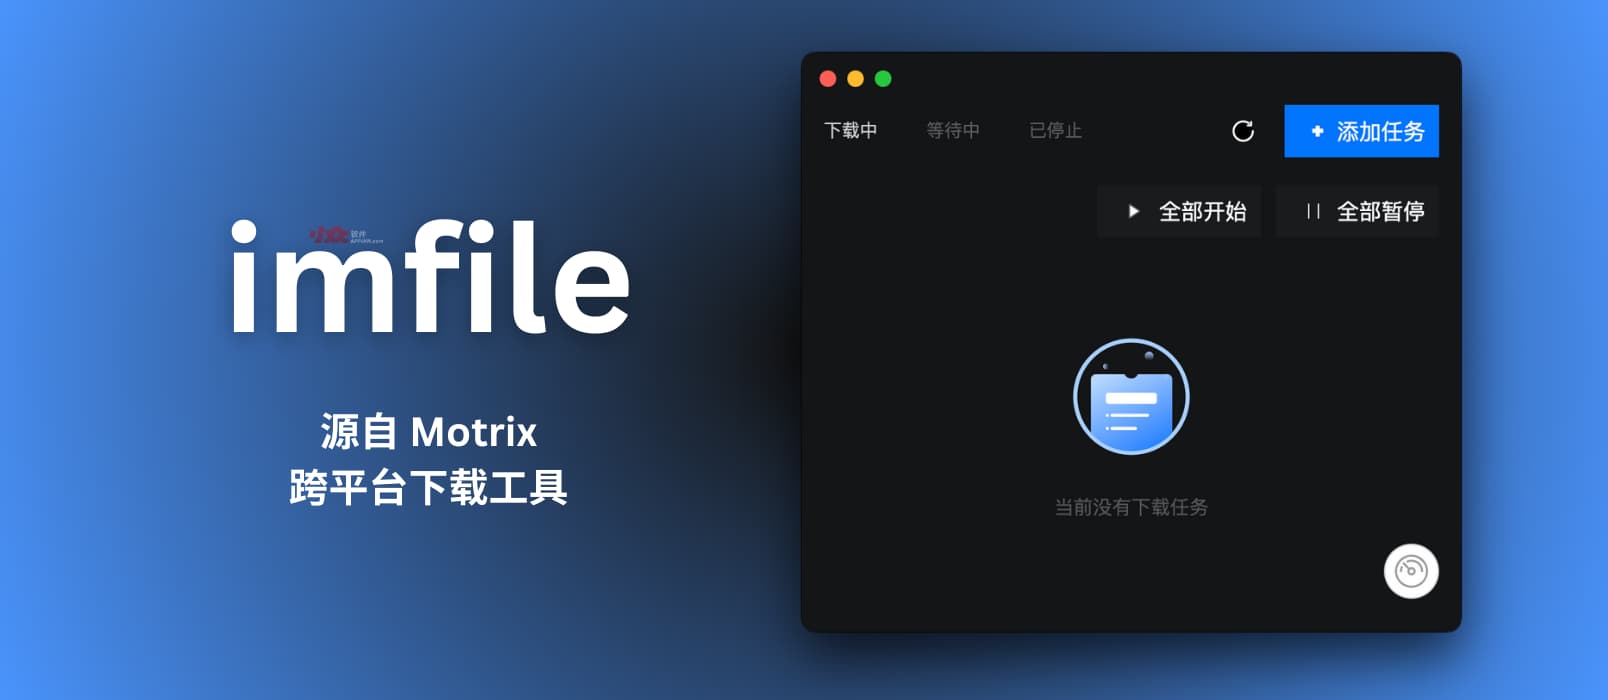 imfile -  源自 Motrix，跨平台下载工具，支持 HTTP、BT、磁力